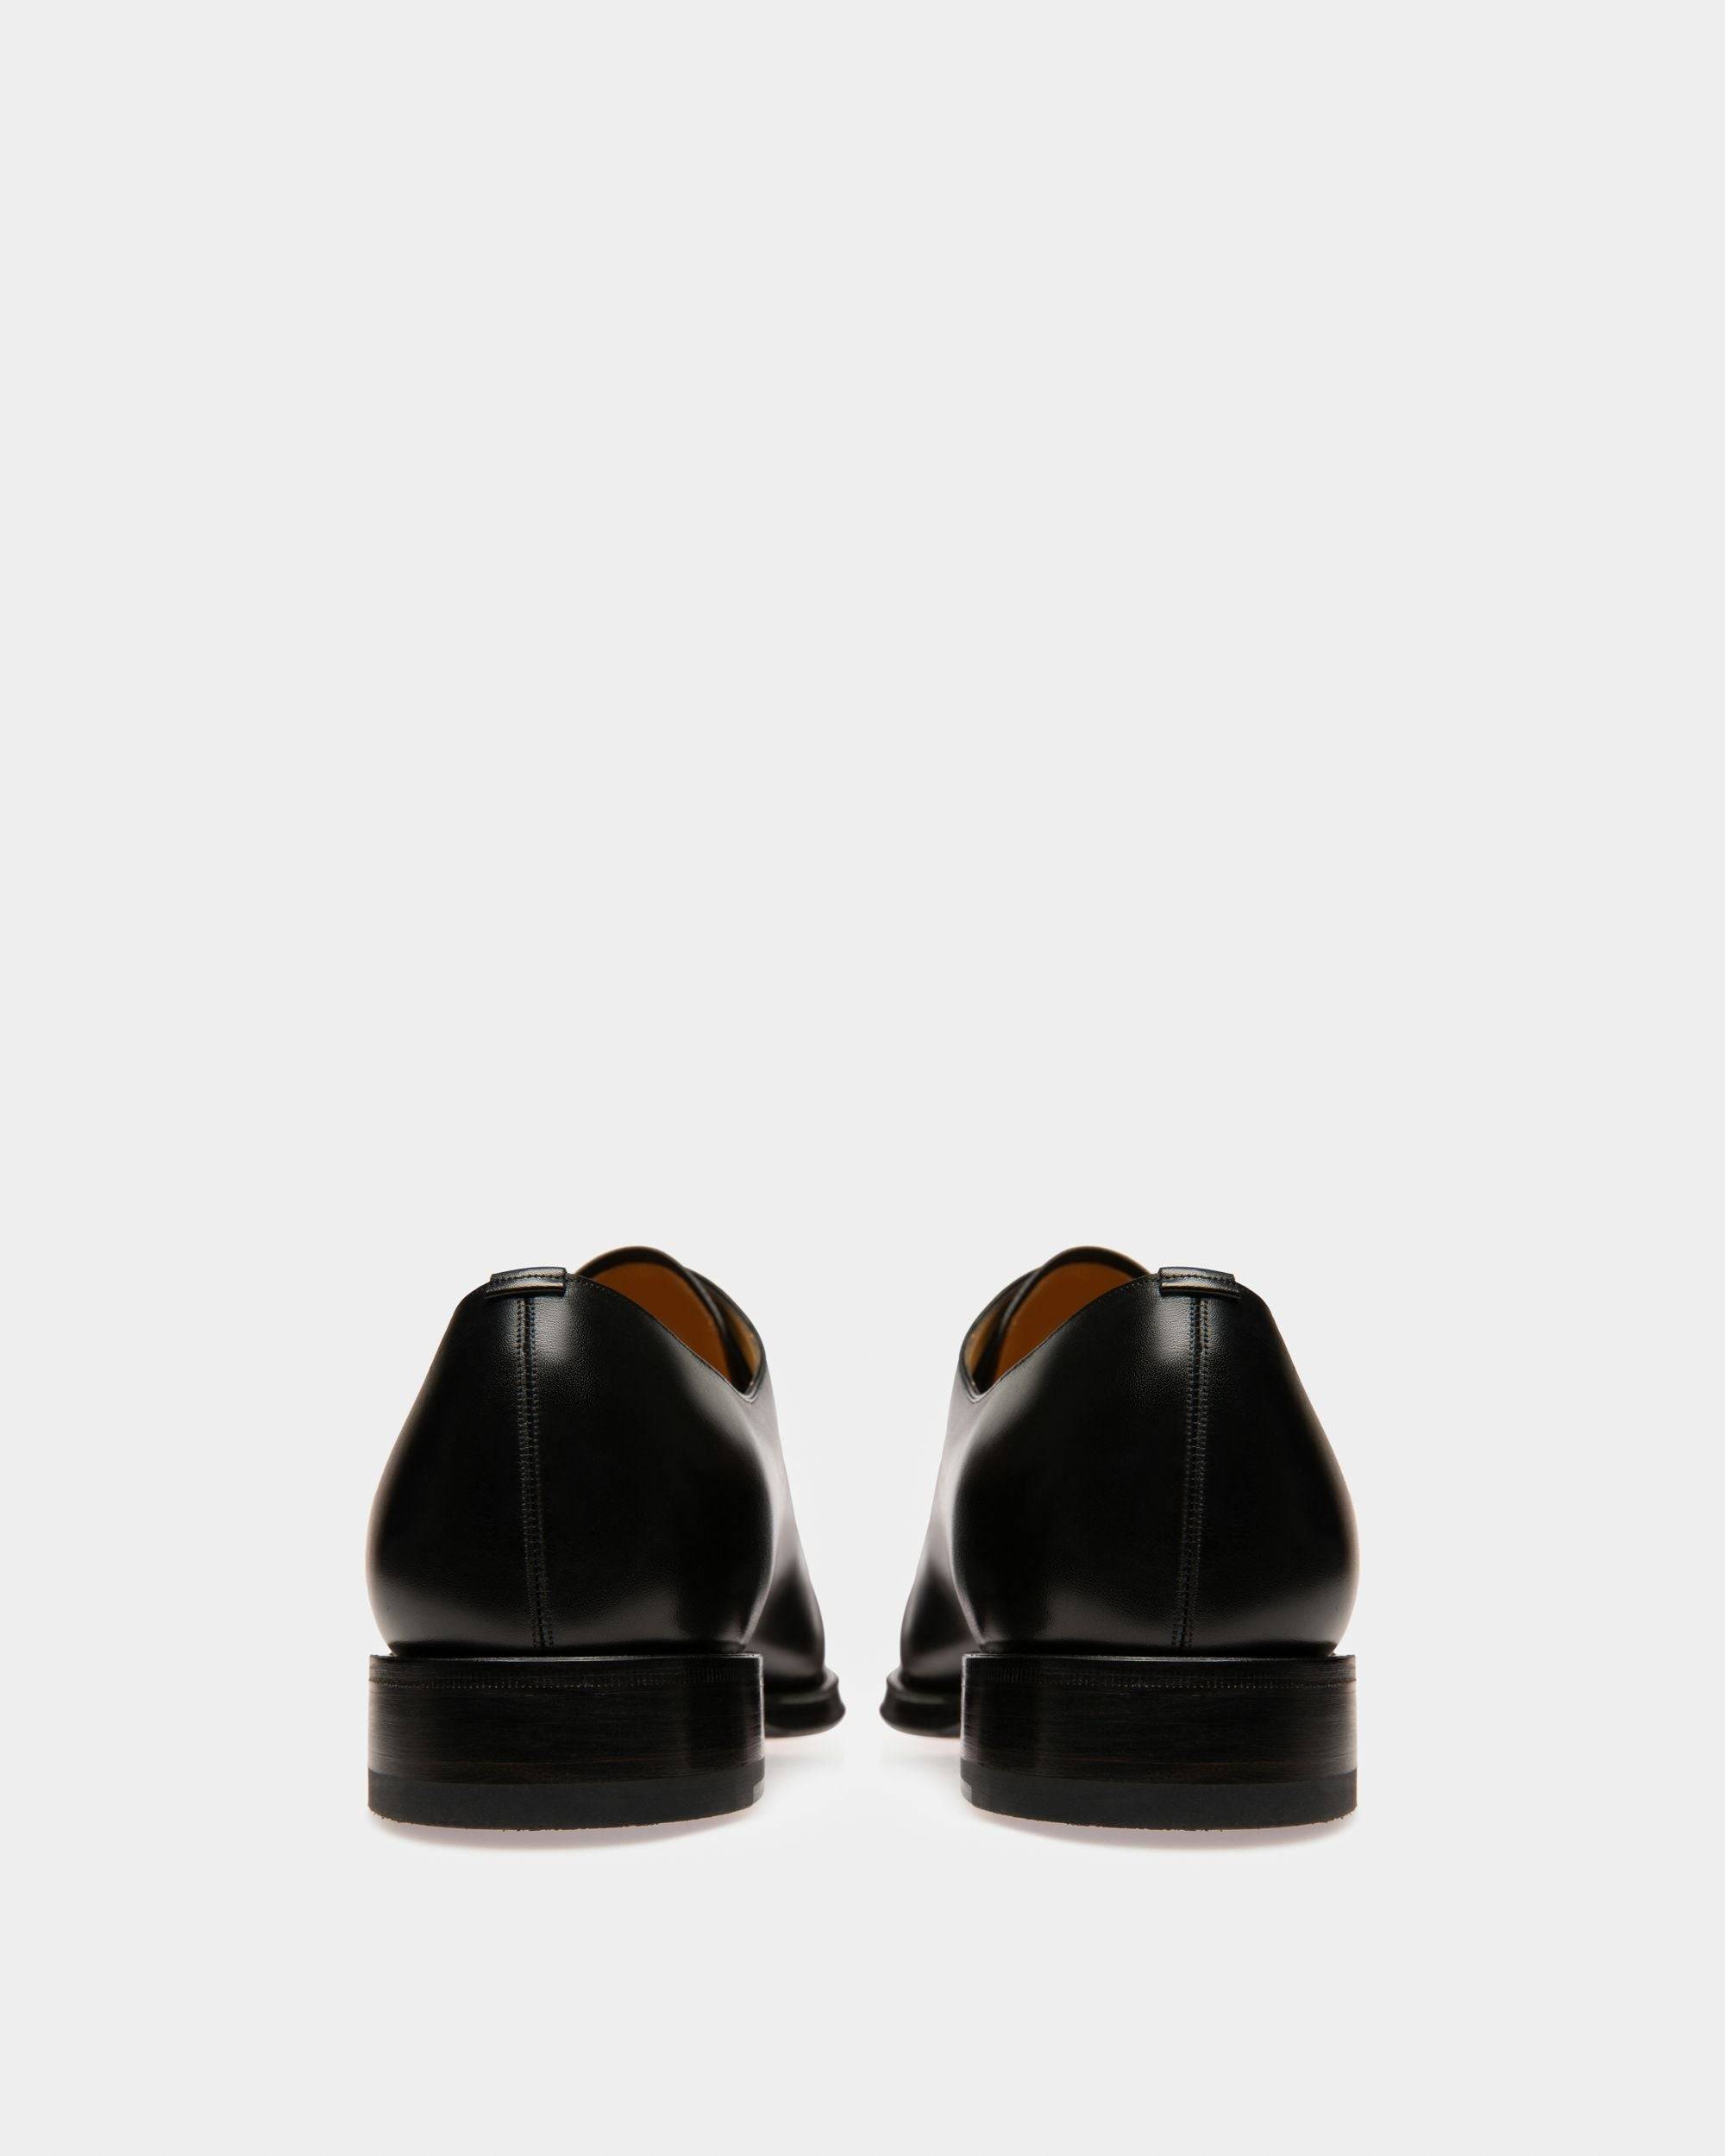 Scolder Men's Plain Calf Leather Oxford Shoe In Black - Men's - Bally - 04